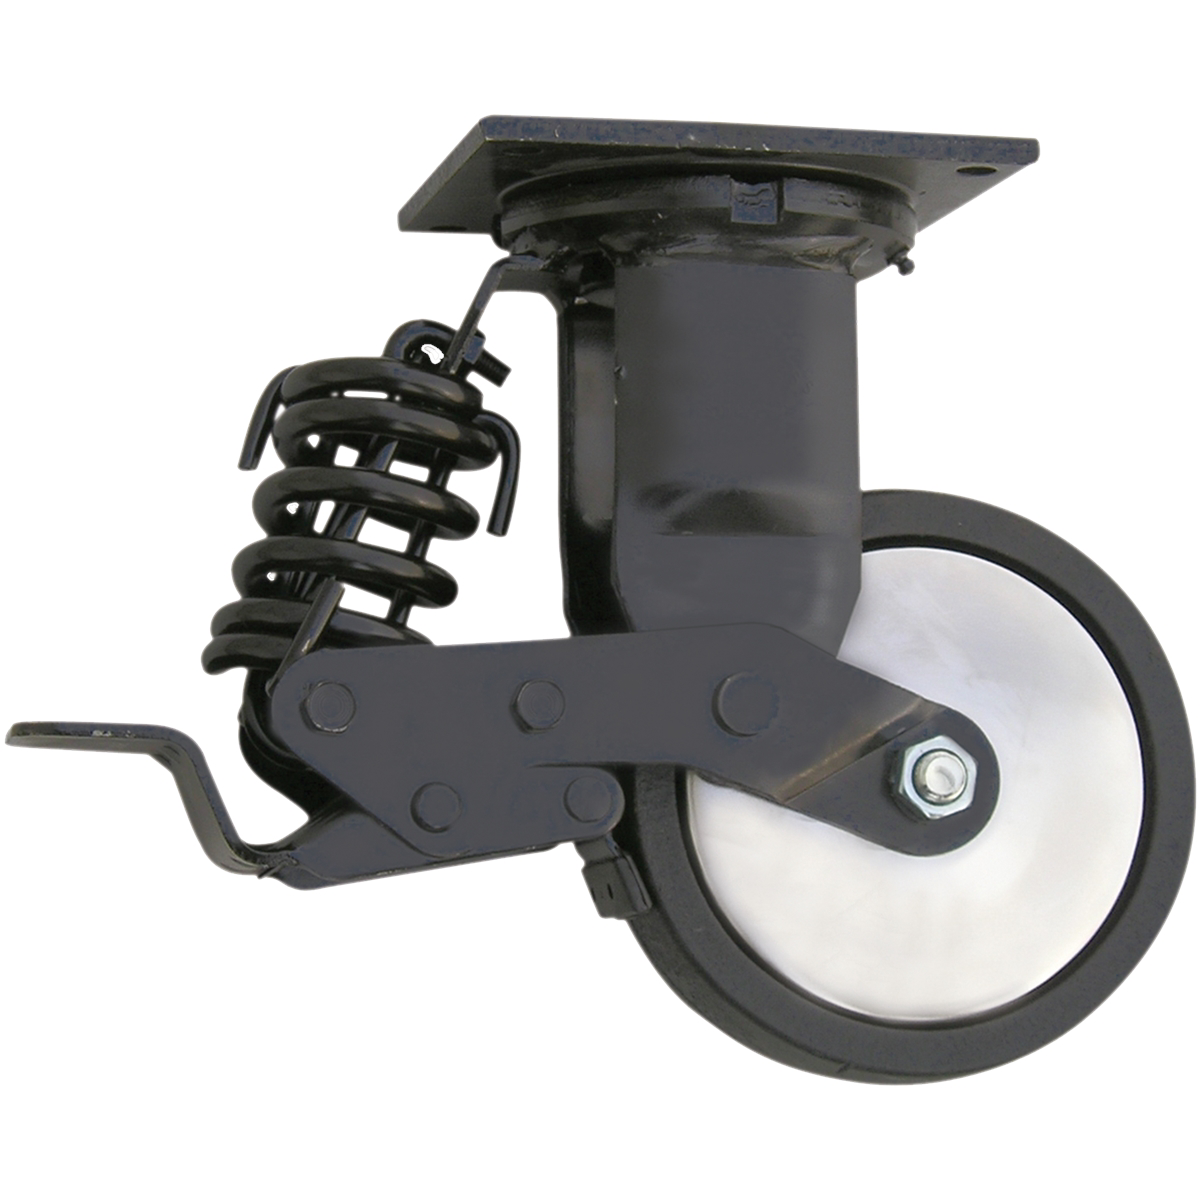 1 Appliance Roller - caster wheel distributing company, heavy equipment,  caster wheels online